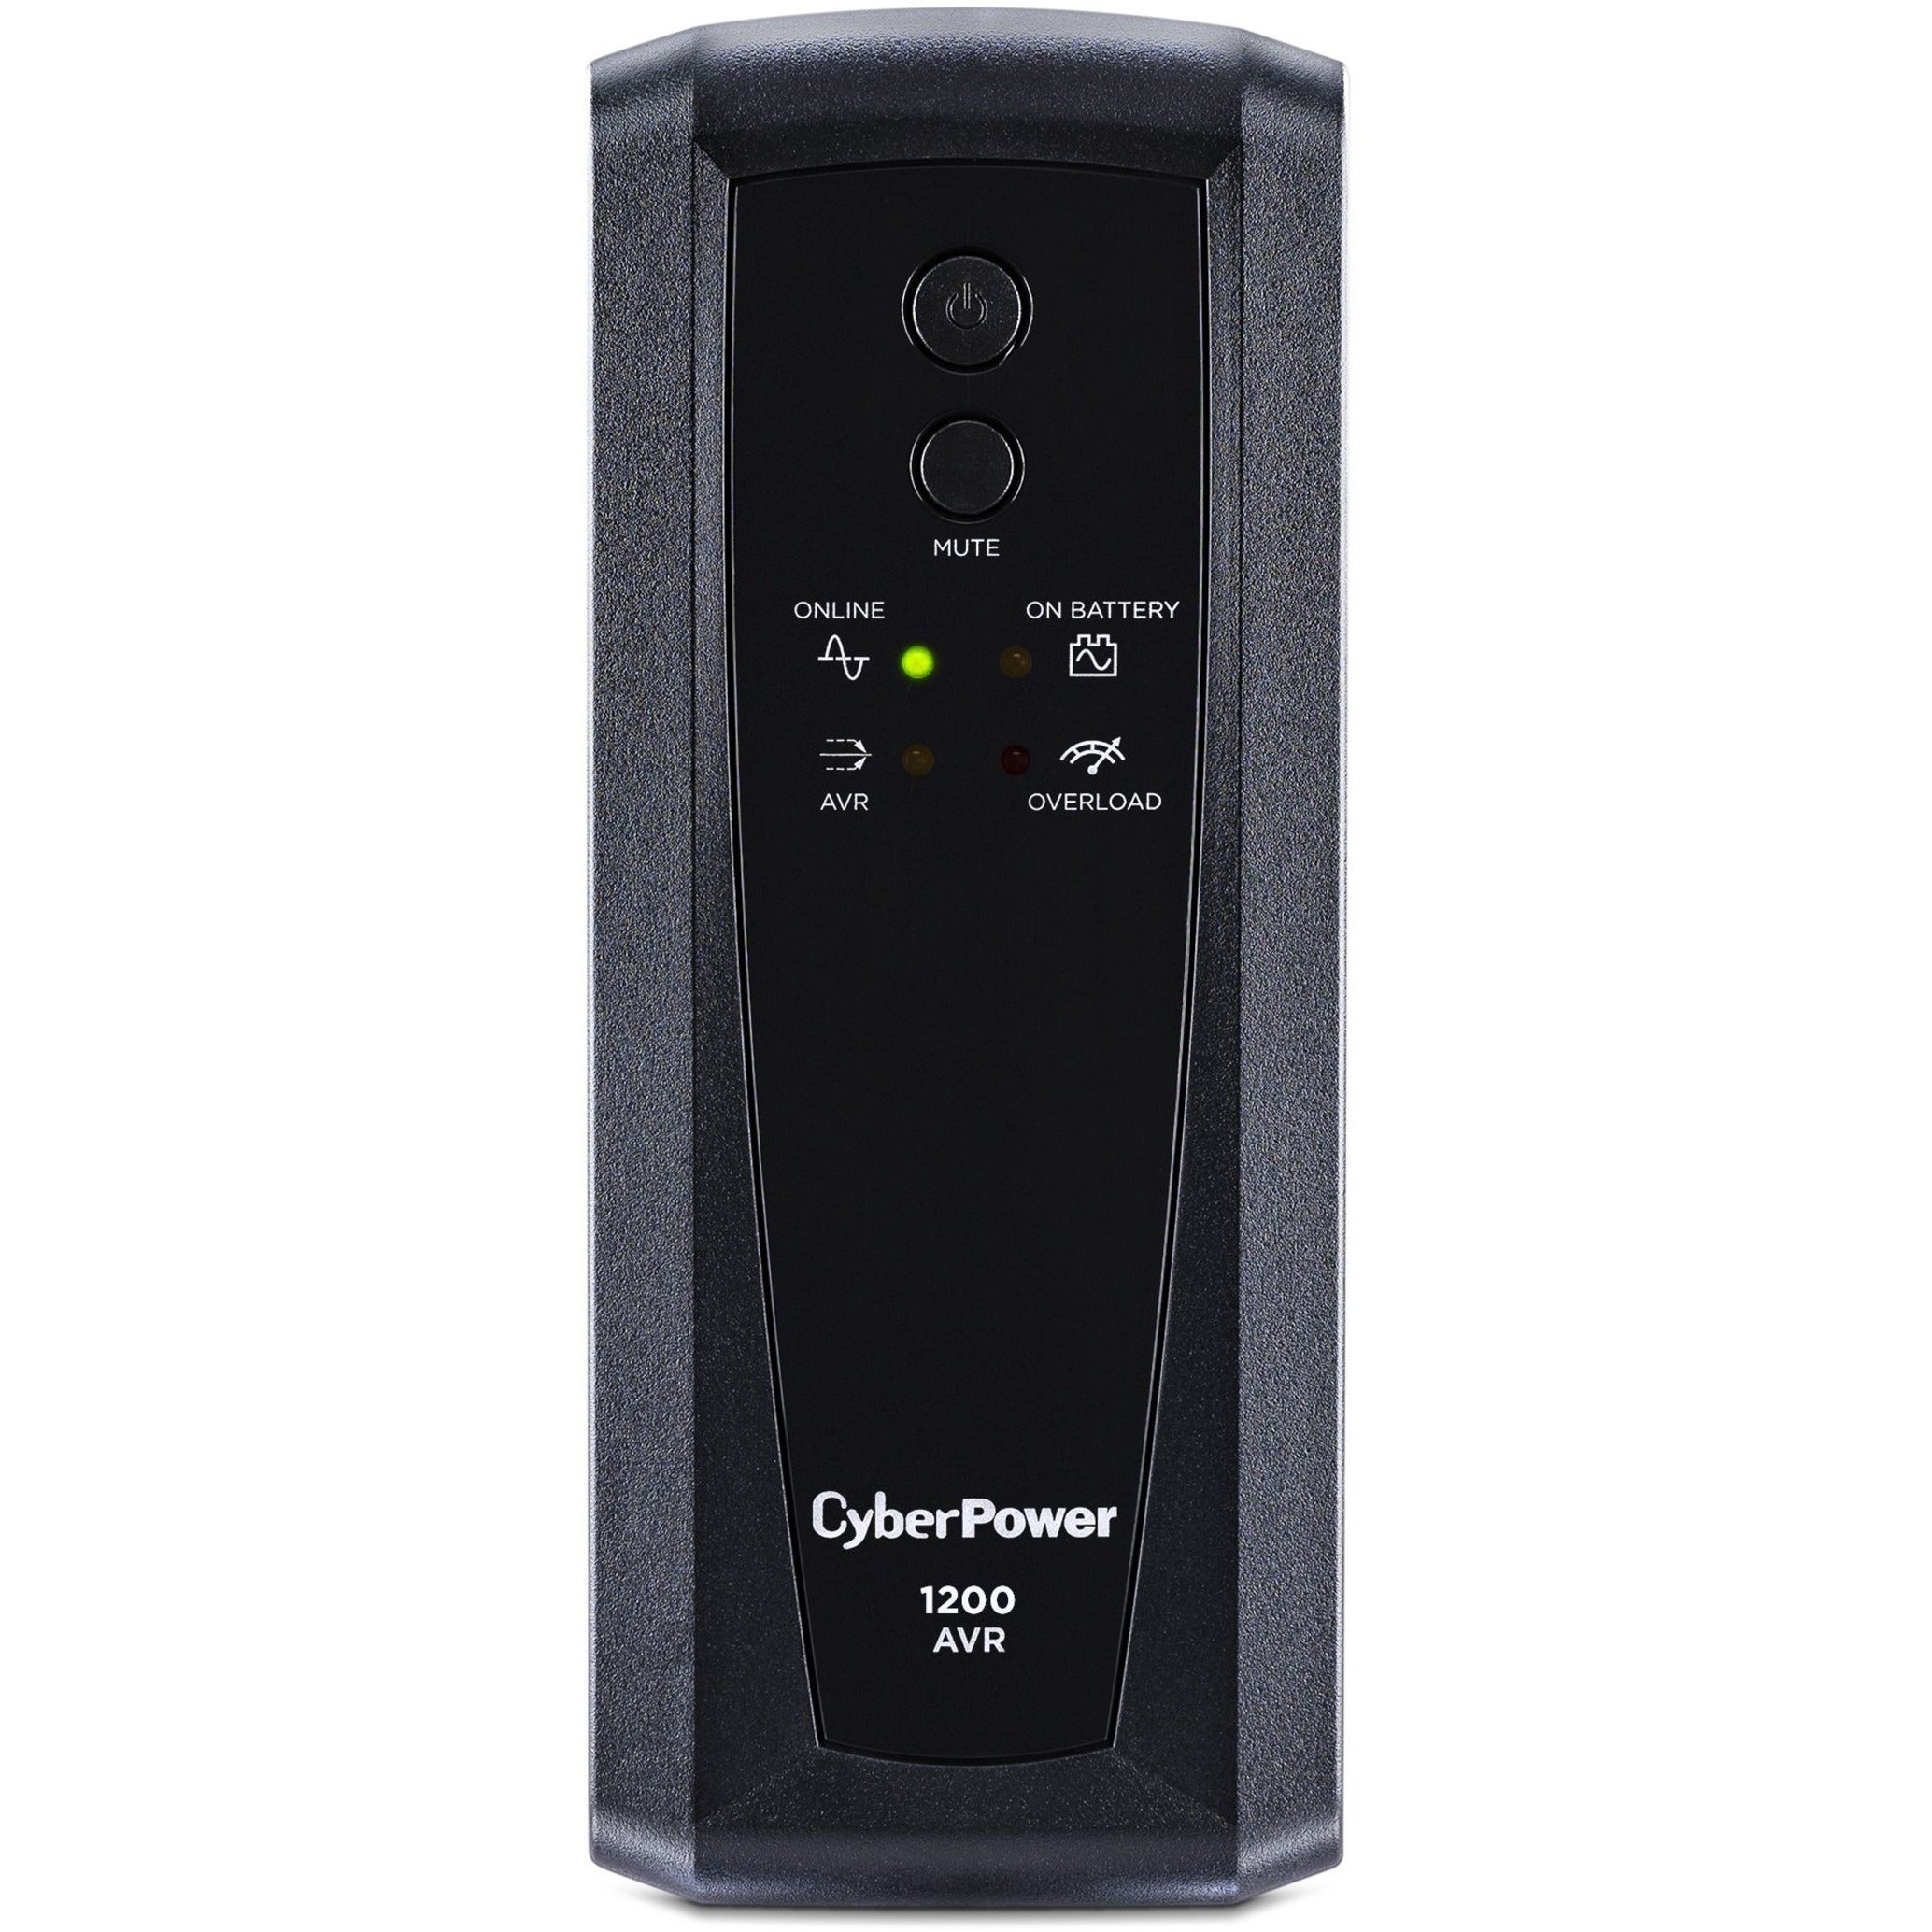 CyberPower CP1200AVR AVR UPS Systems, 1200VA/720W, 3-Year Warranty, Energy Star, USB & Serial Port